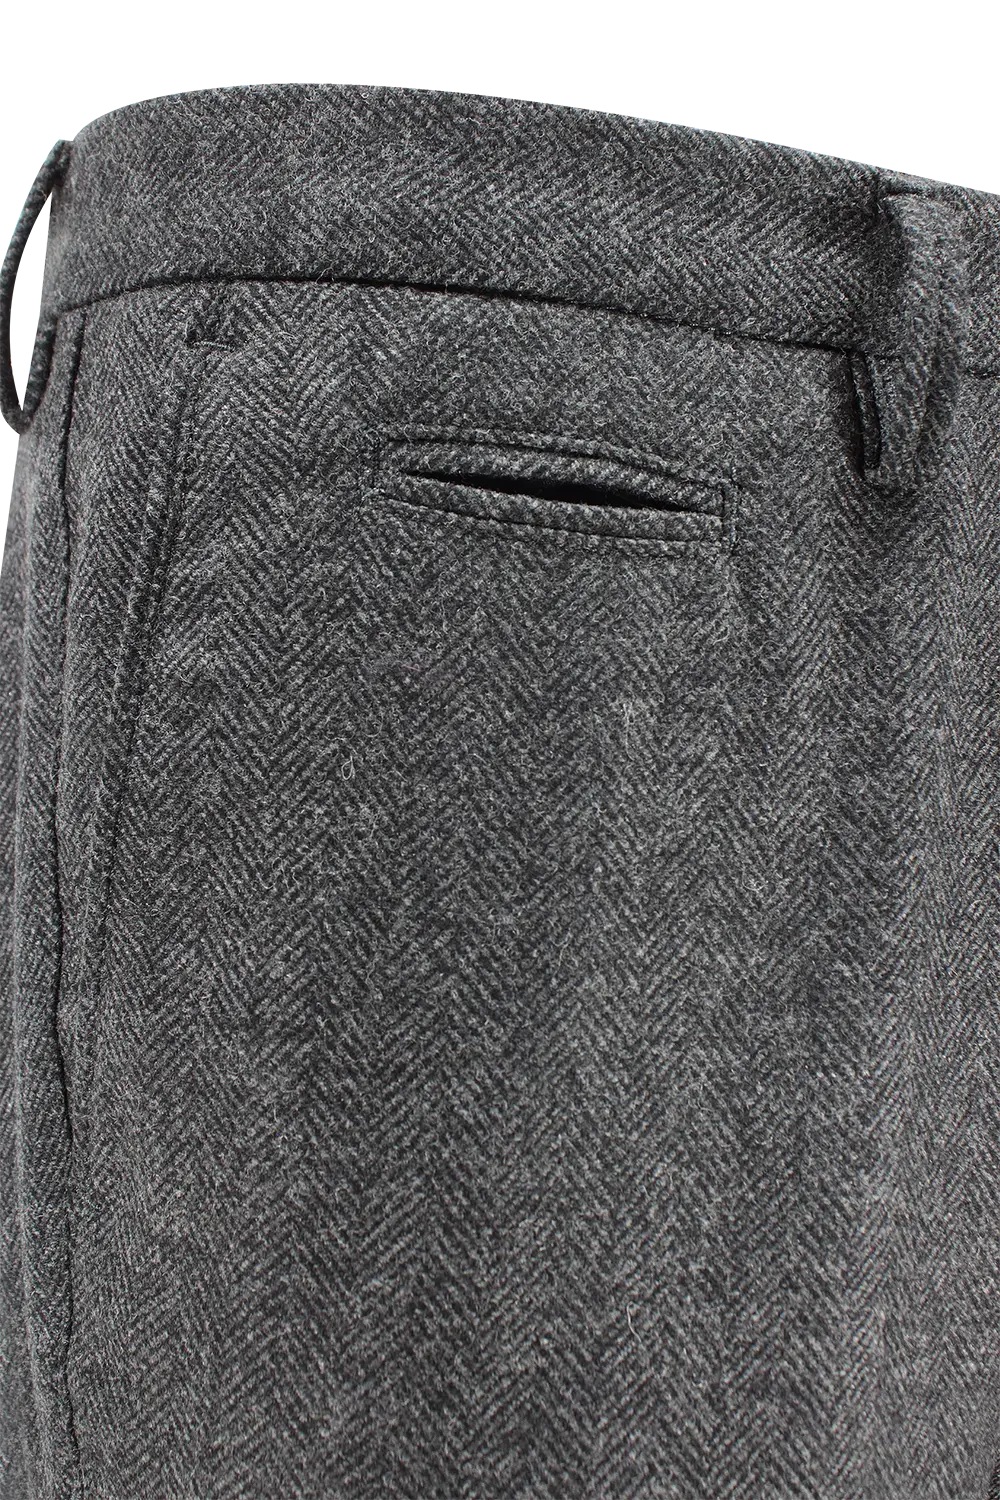 Pantalone in lana spigata antracite taschino